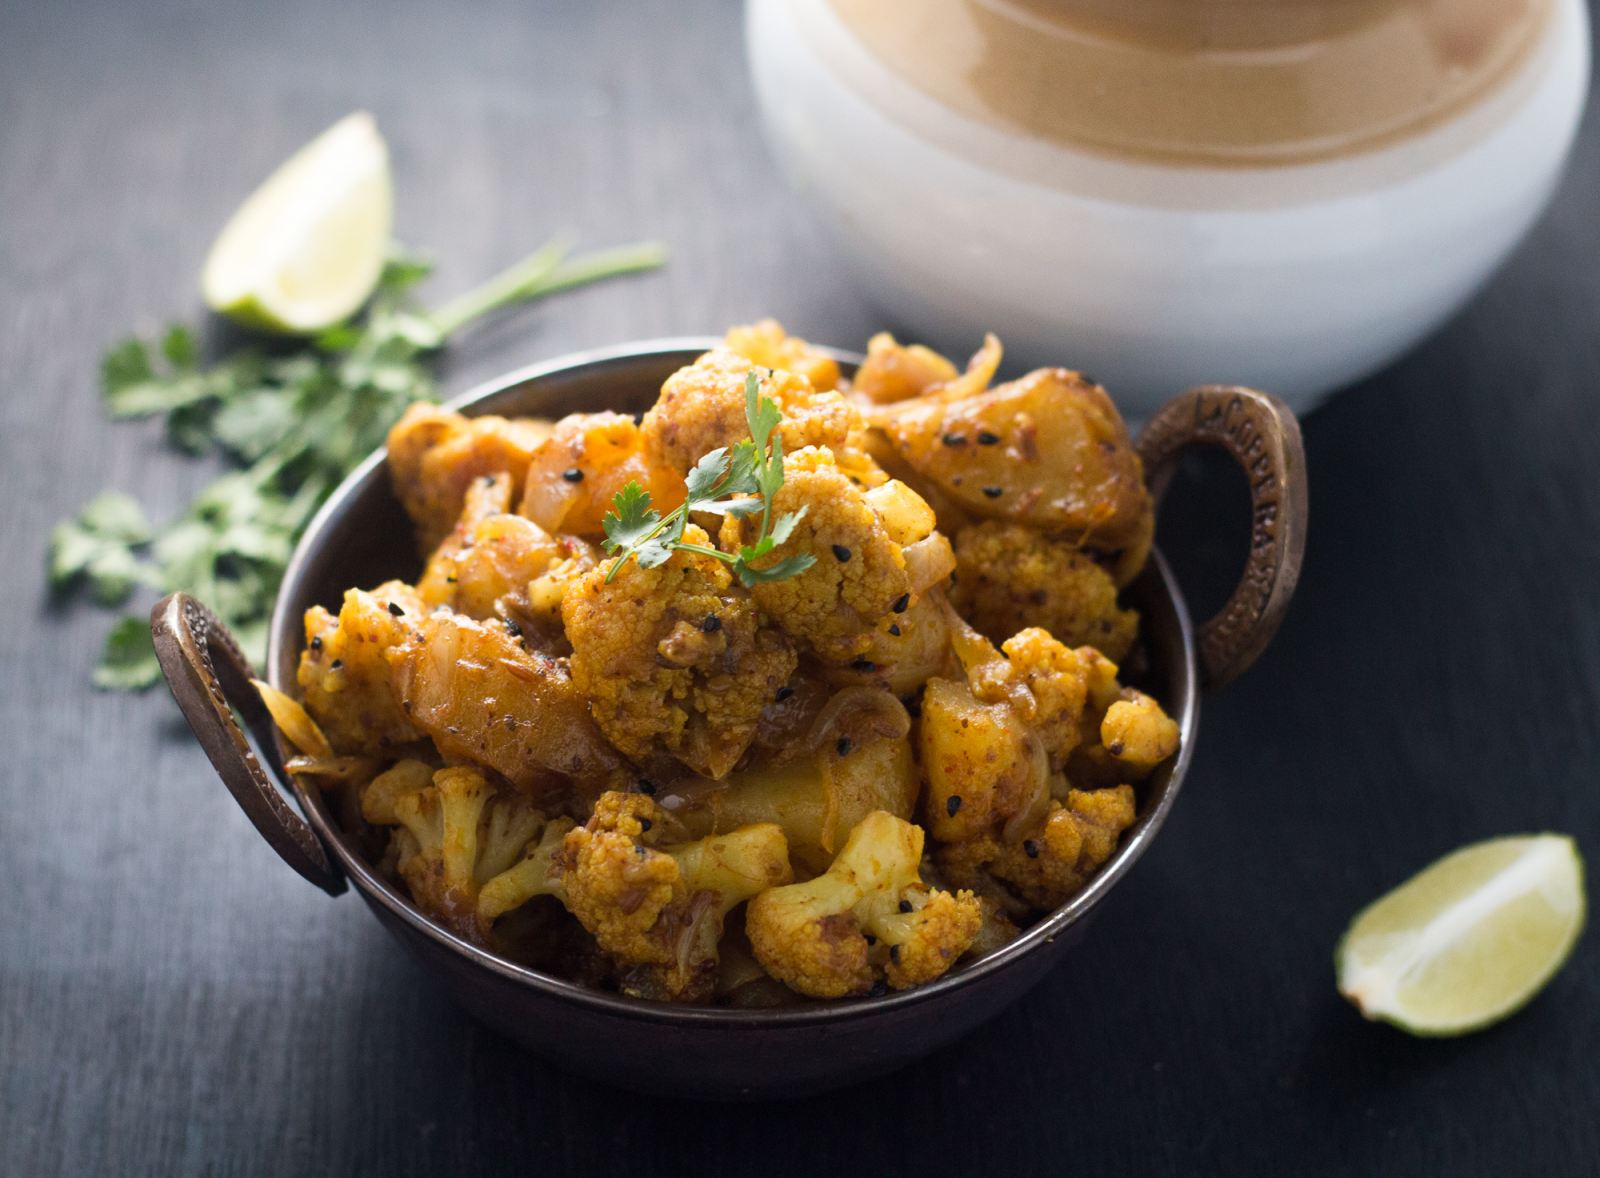 Achari Aloo Gobi Recipe - Spicy Indian Cauliflower Stir Fry